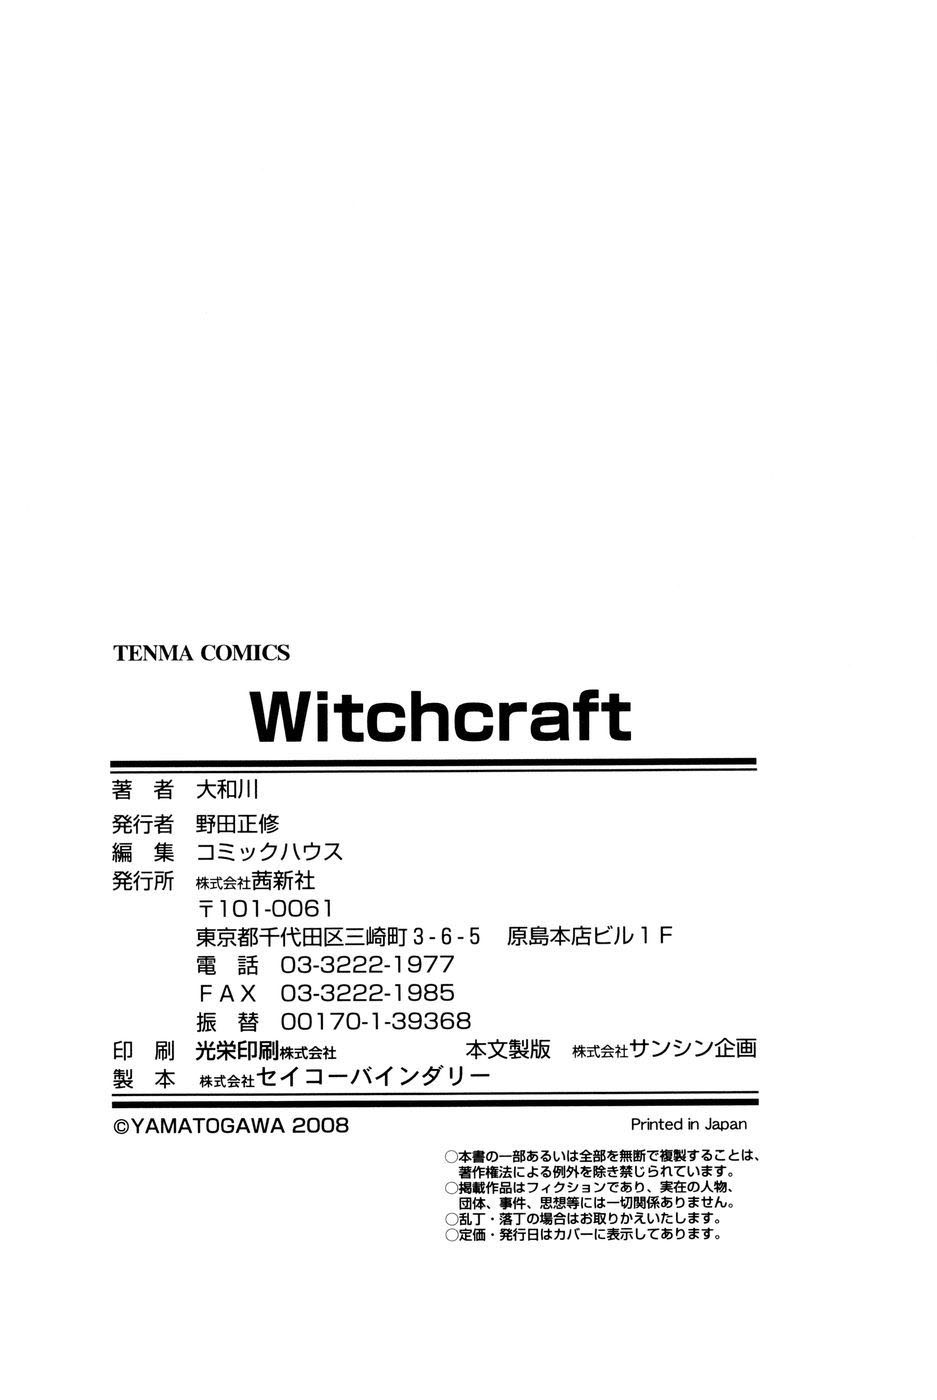 Witchcraft numero d'image 211